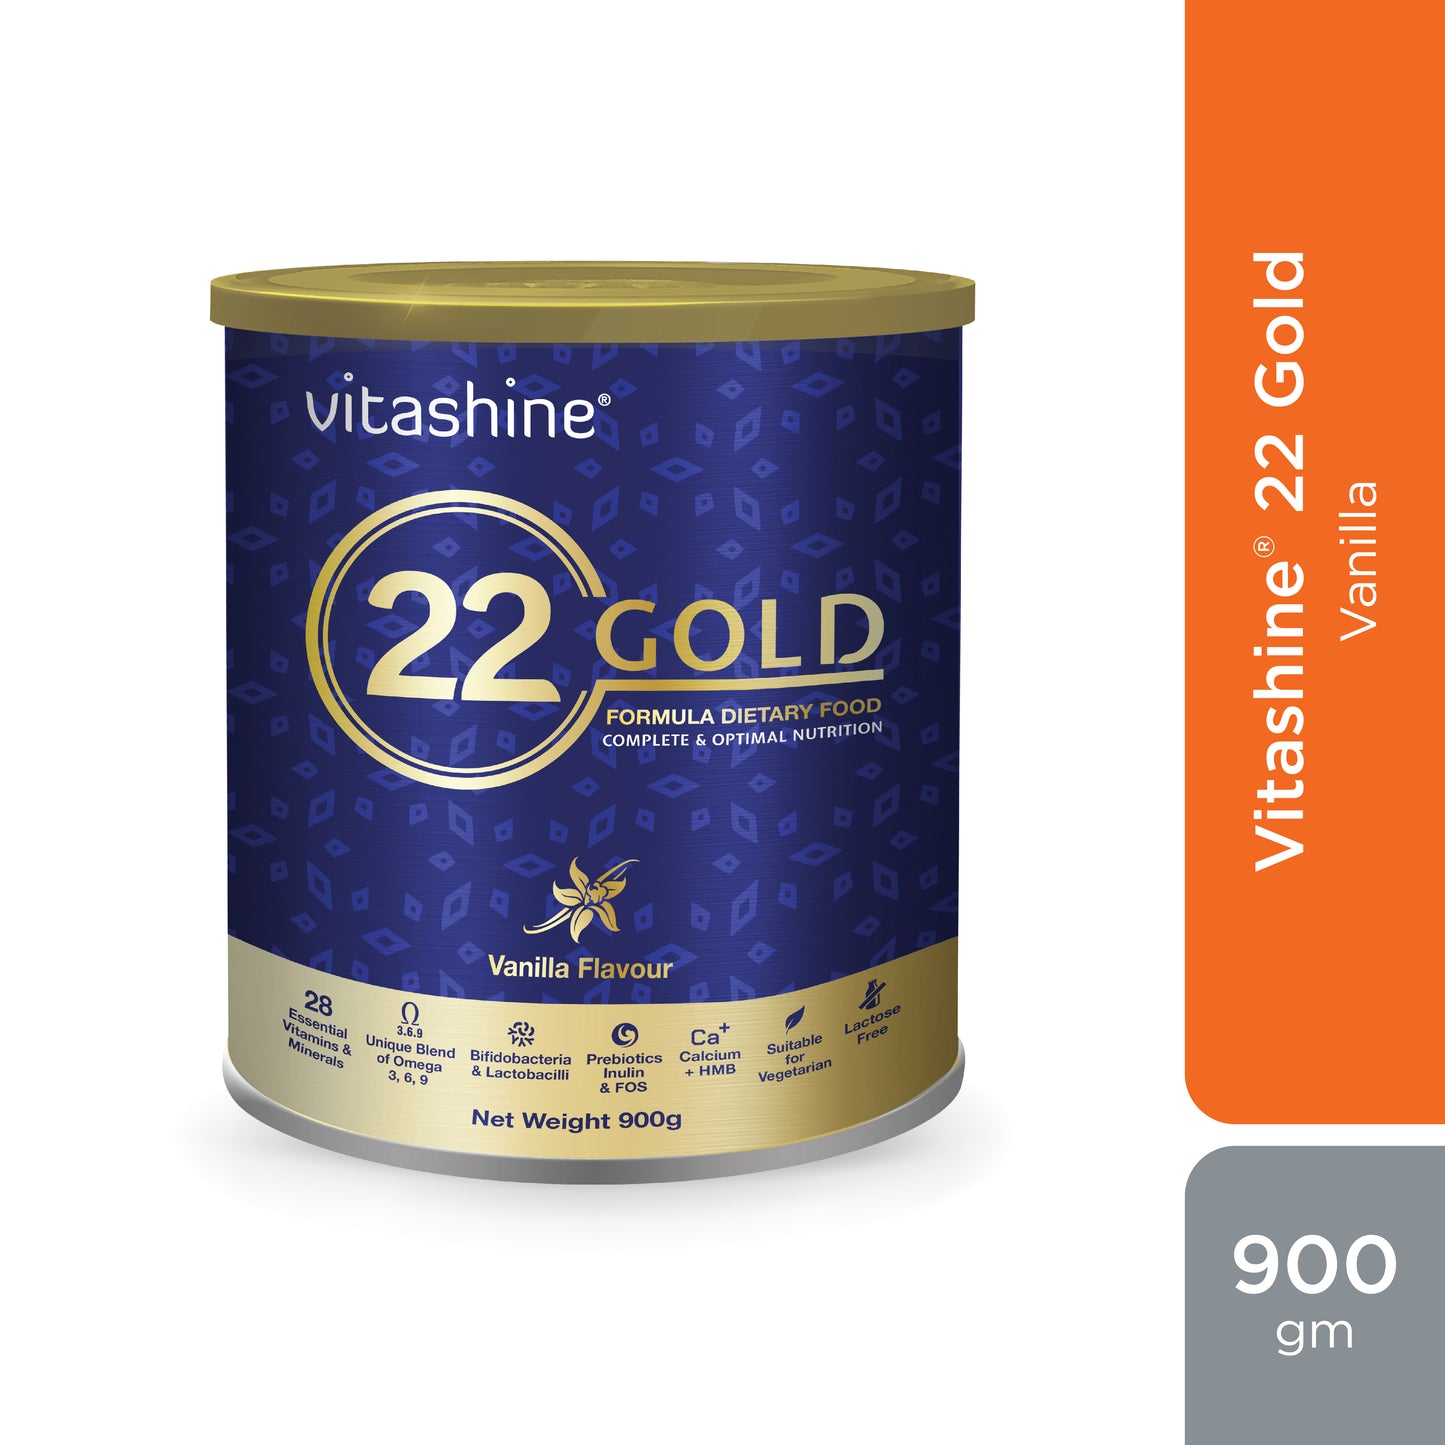 Vitashine® 22 Gold Daily Nutrition (Plant Based)